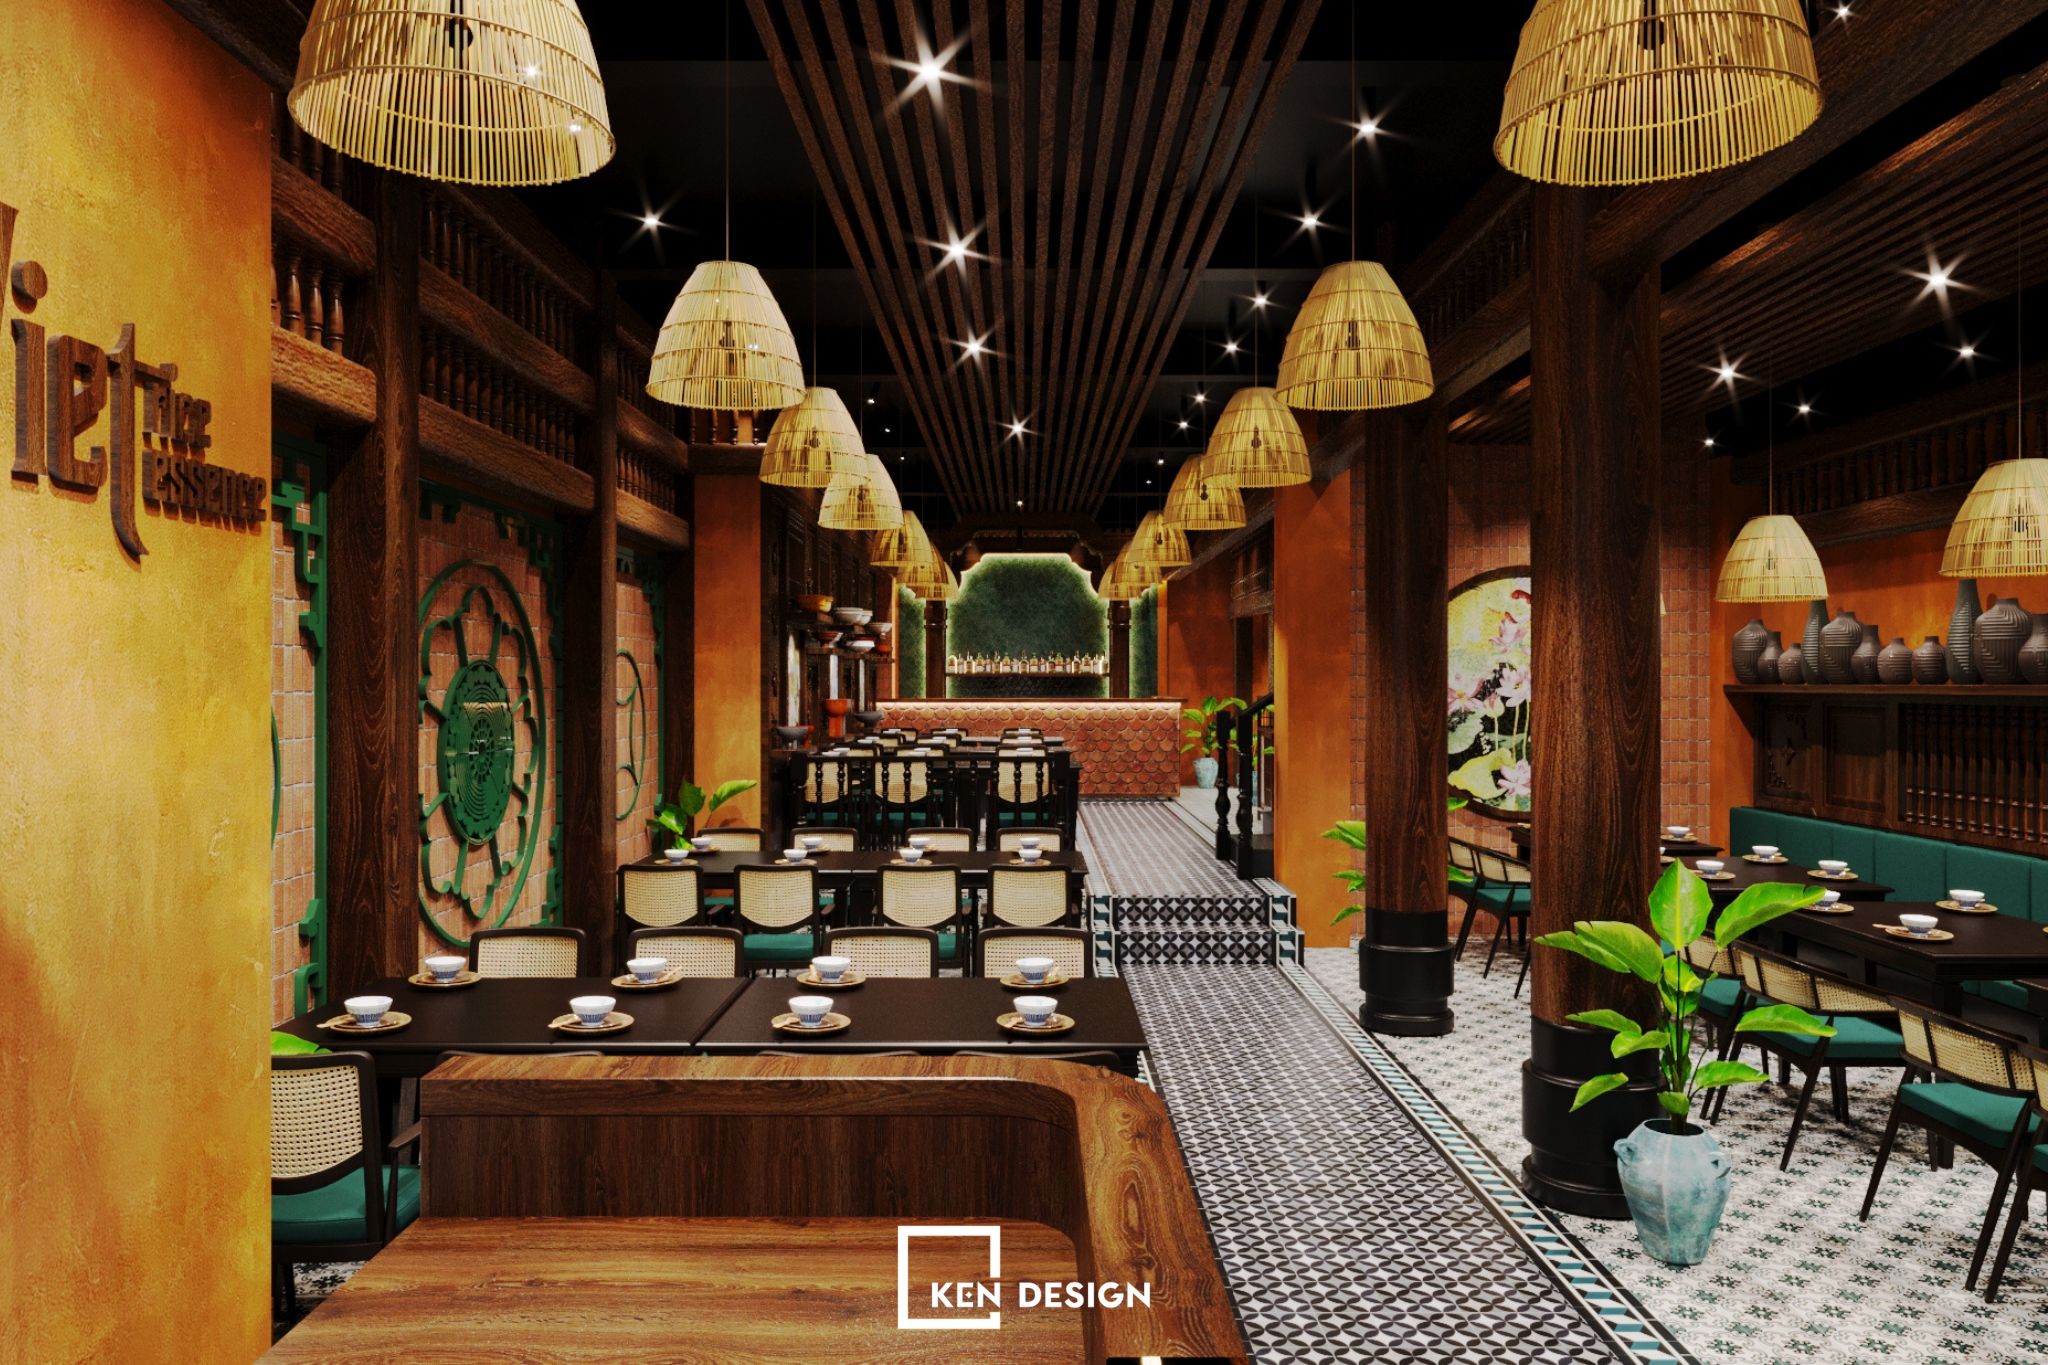 The design of Viet Rice Essence restaurant